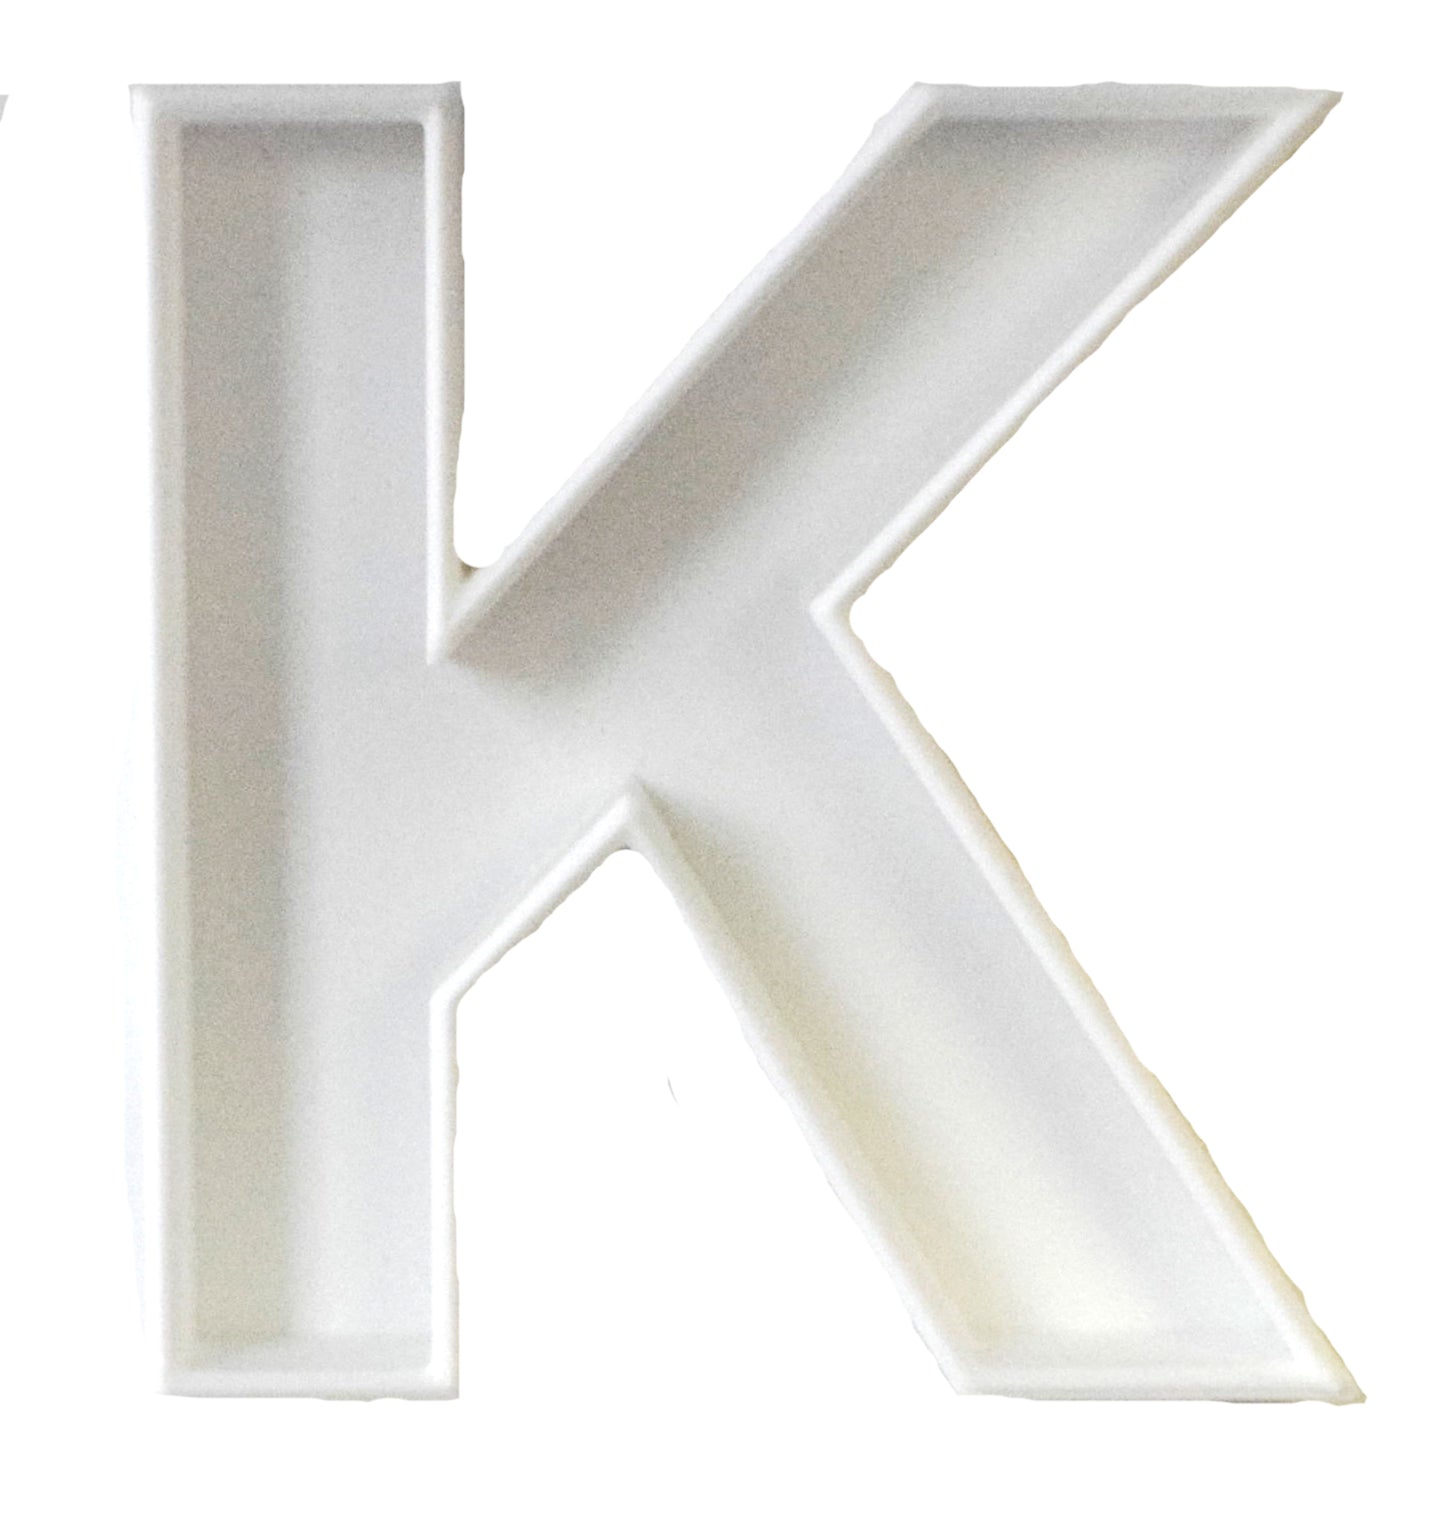 K Letter Alphabet Stencil And Cookie Cutter Set USA Made LSC107K